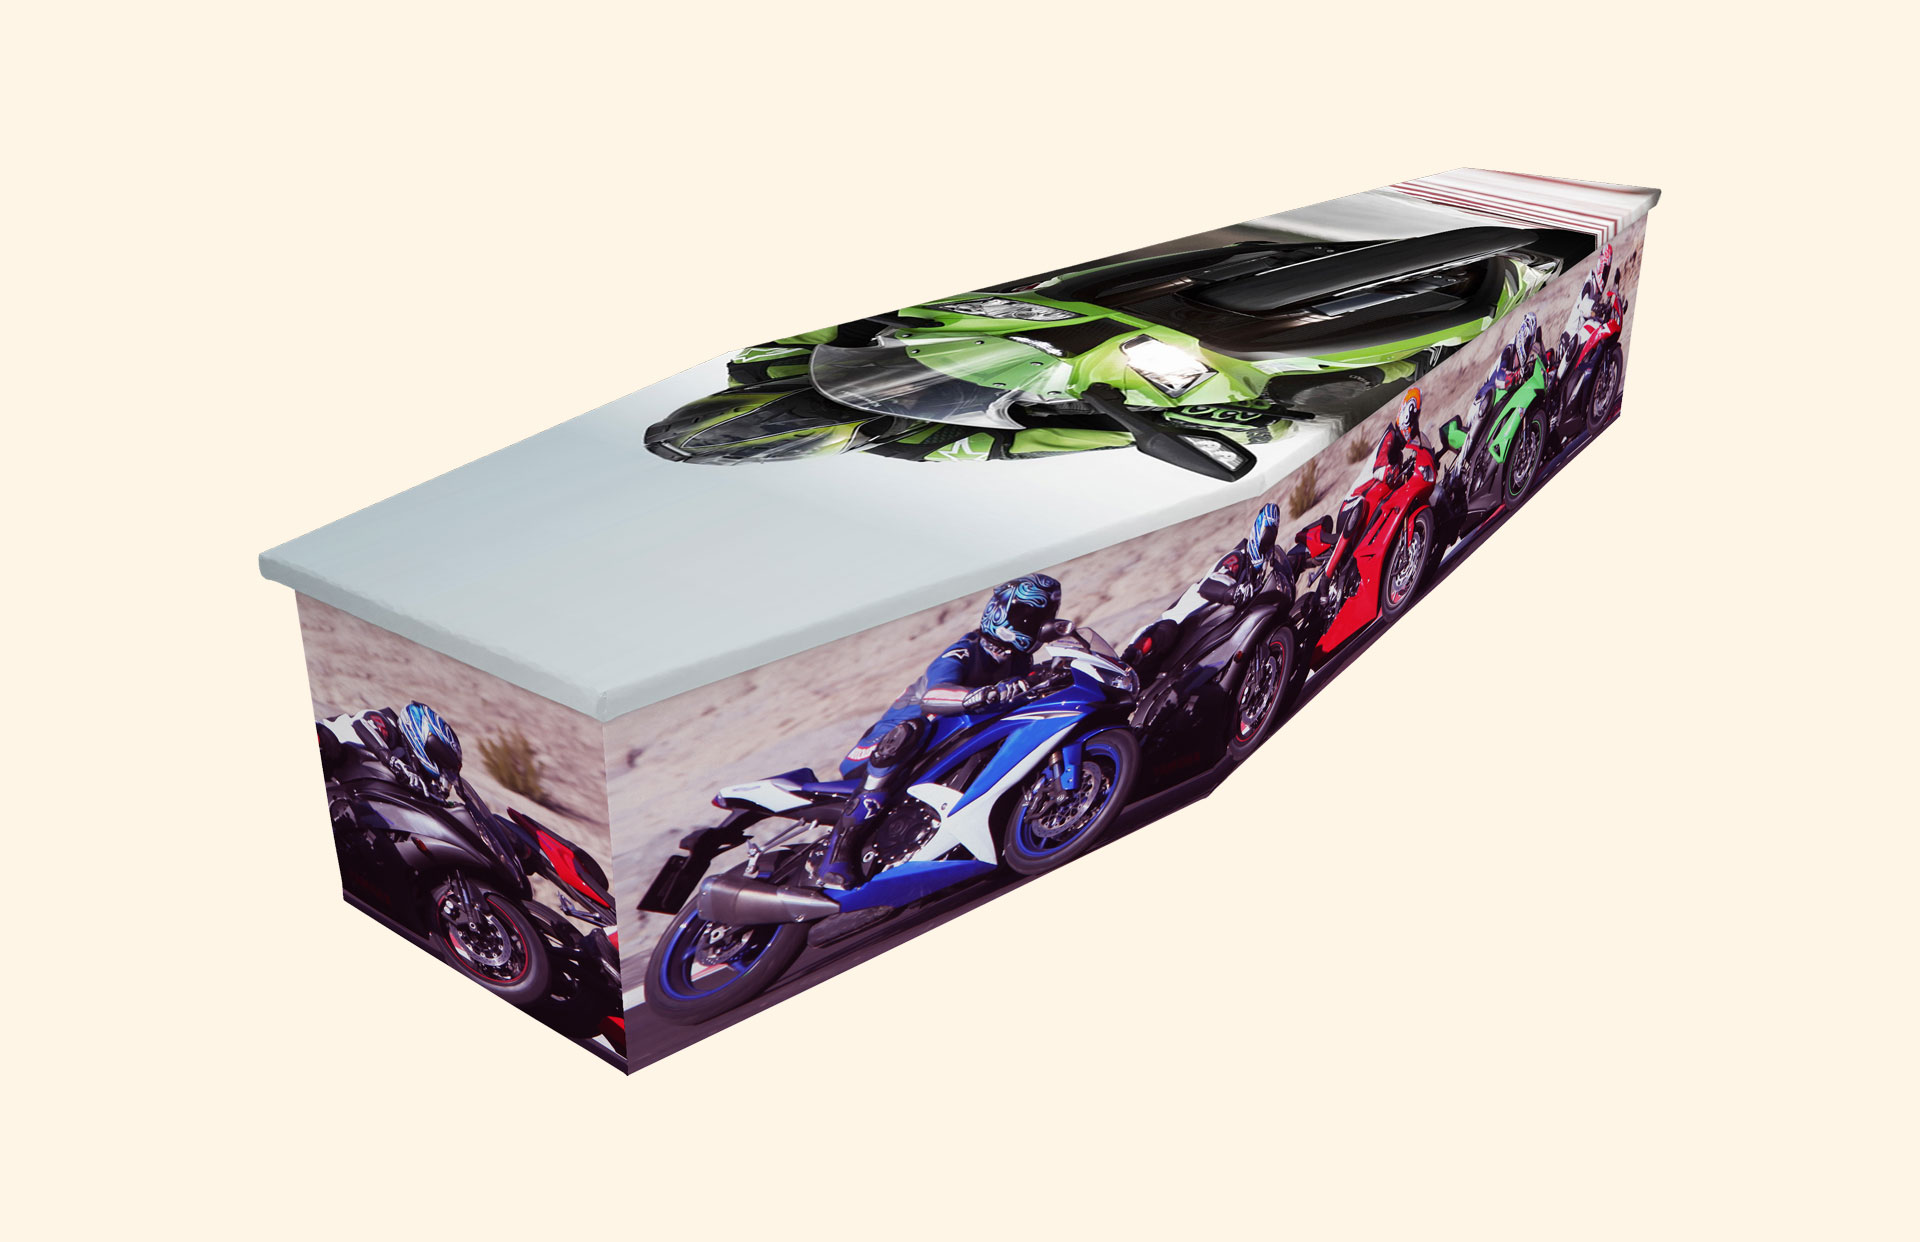 Speed design on a cardboard coffin